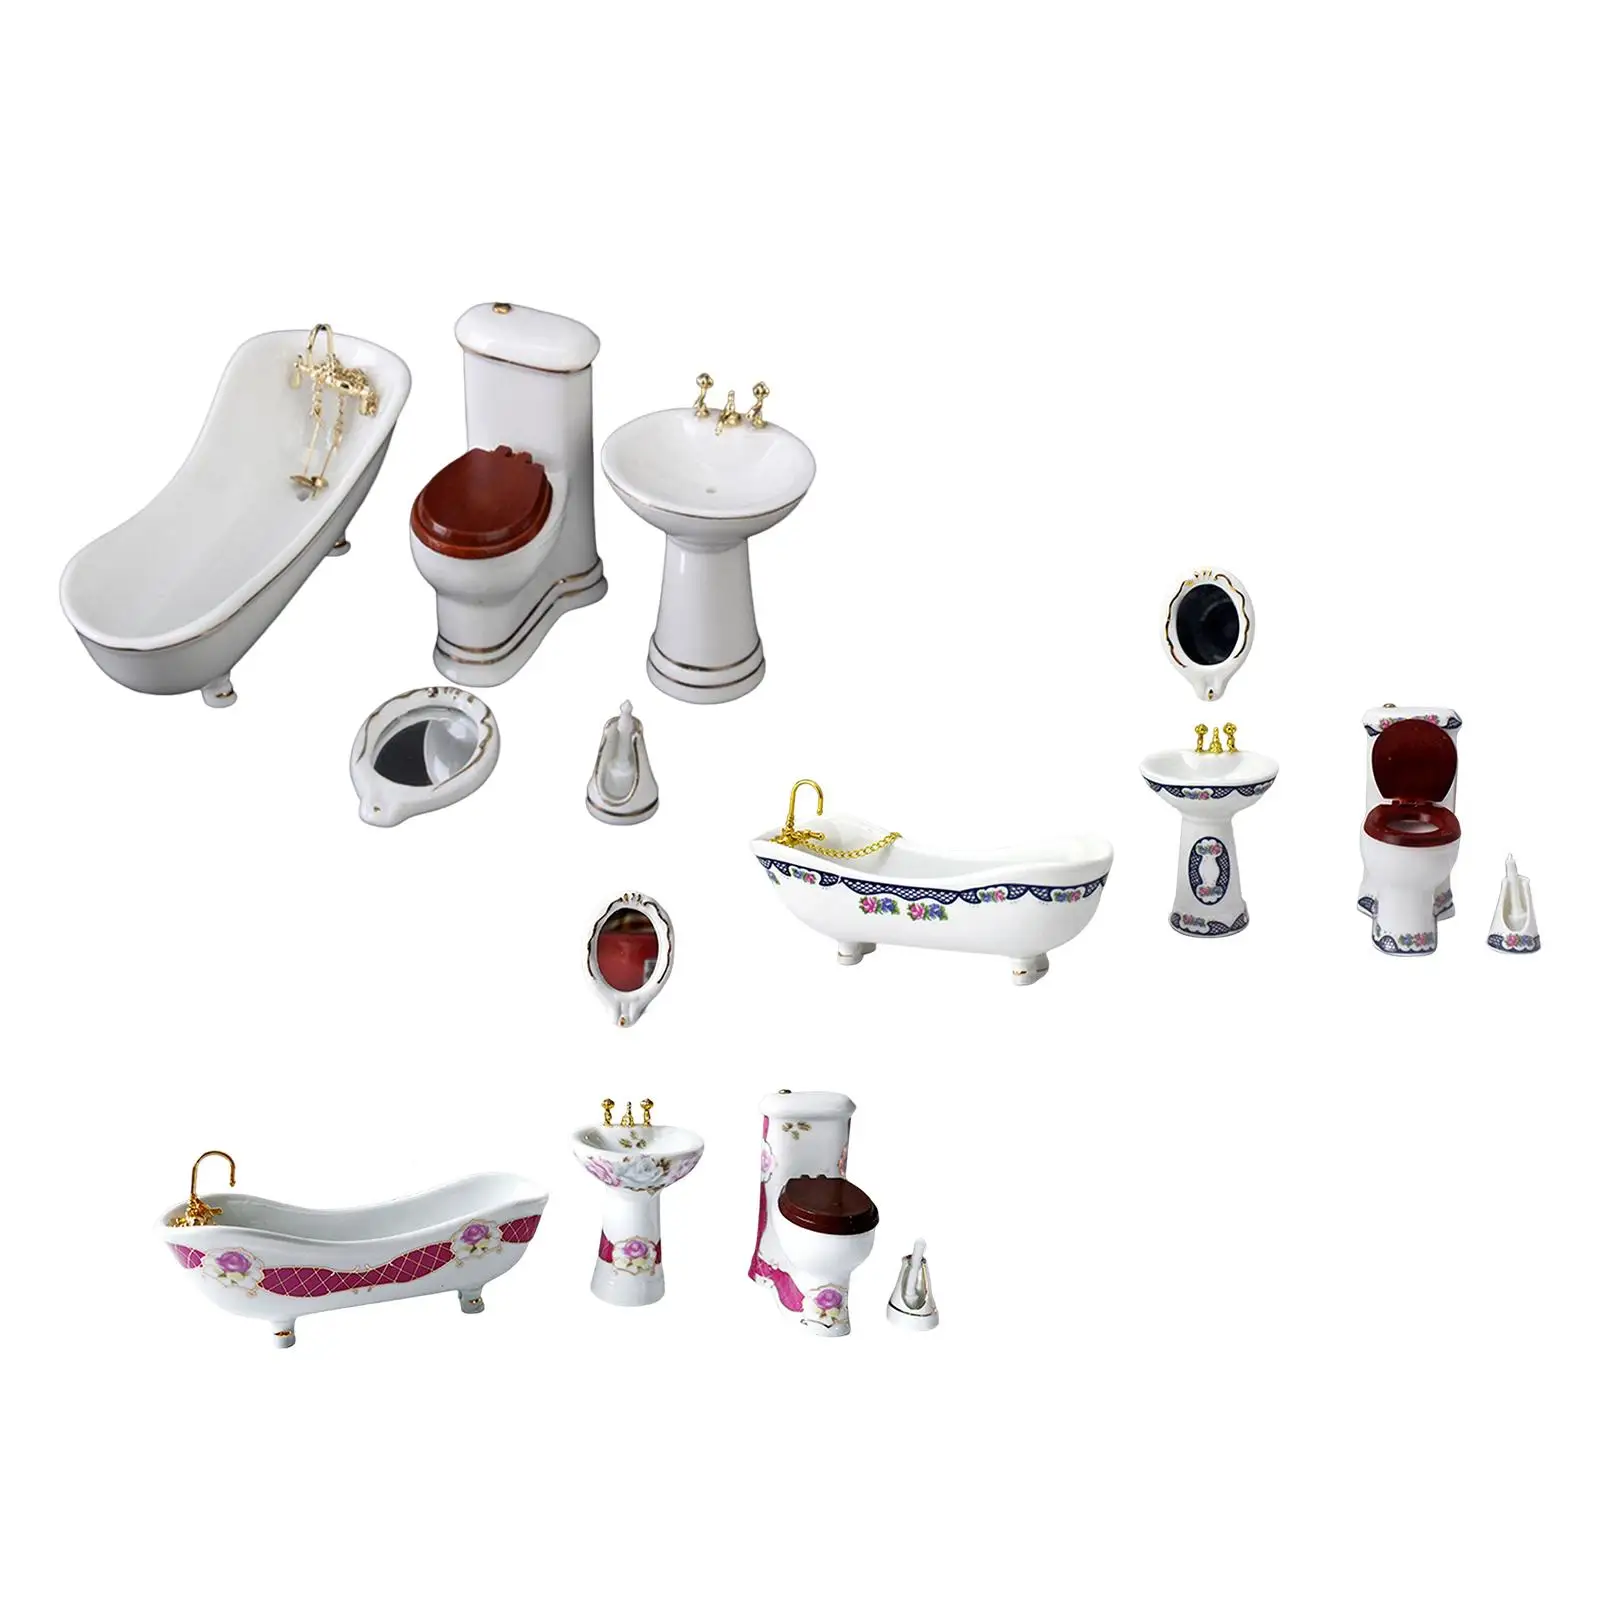 1/12 Scale Dollhouse Bathroom Set, Dollhouse Decoration Accessories for Bathroom